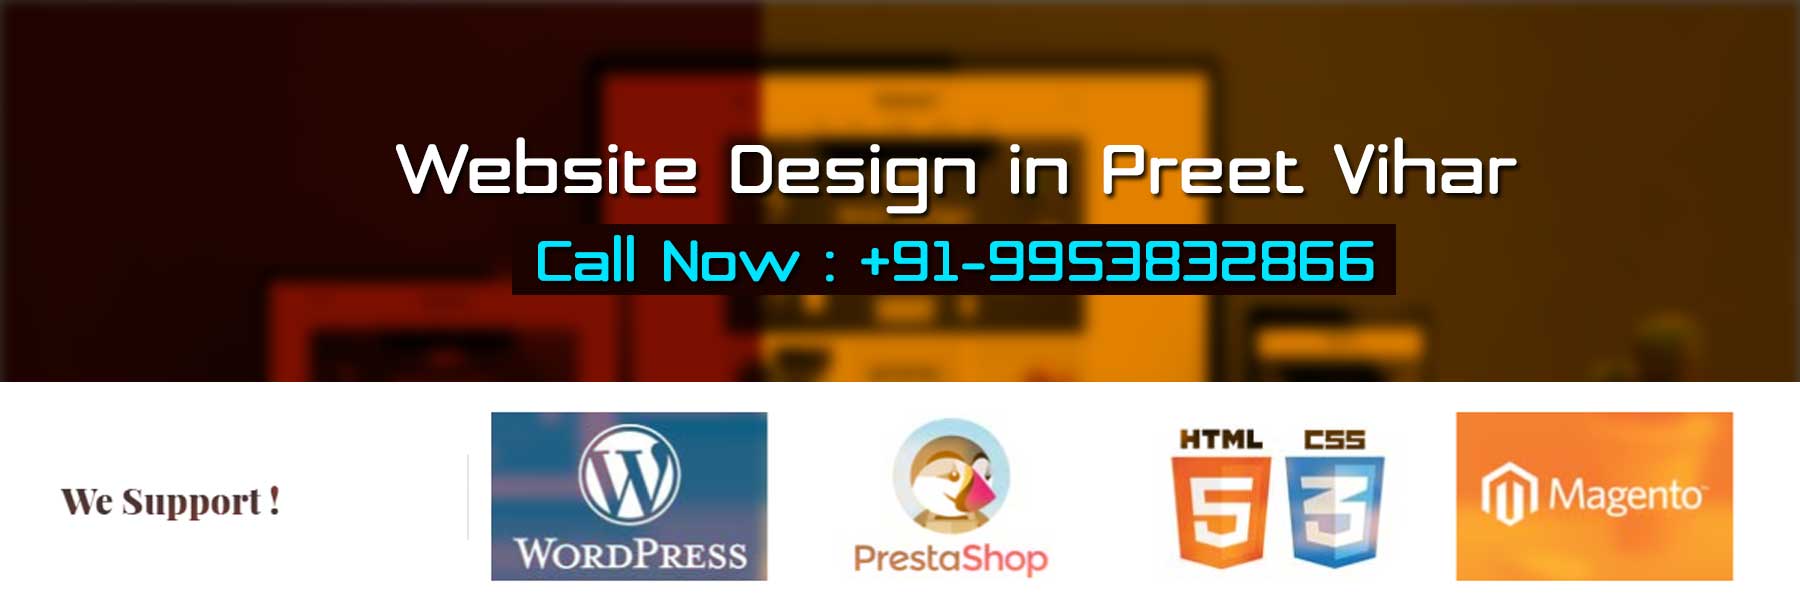 Website Design in Preet Vihar